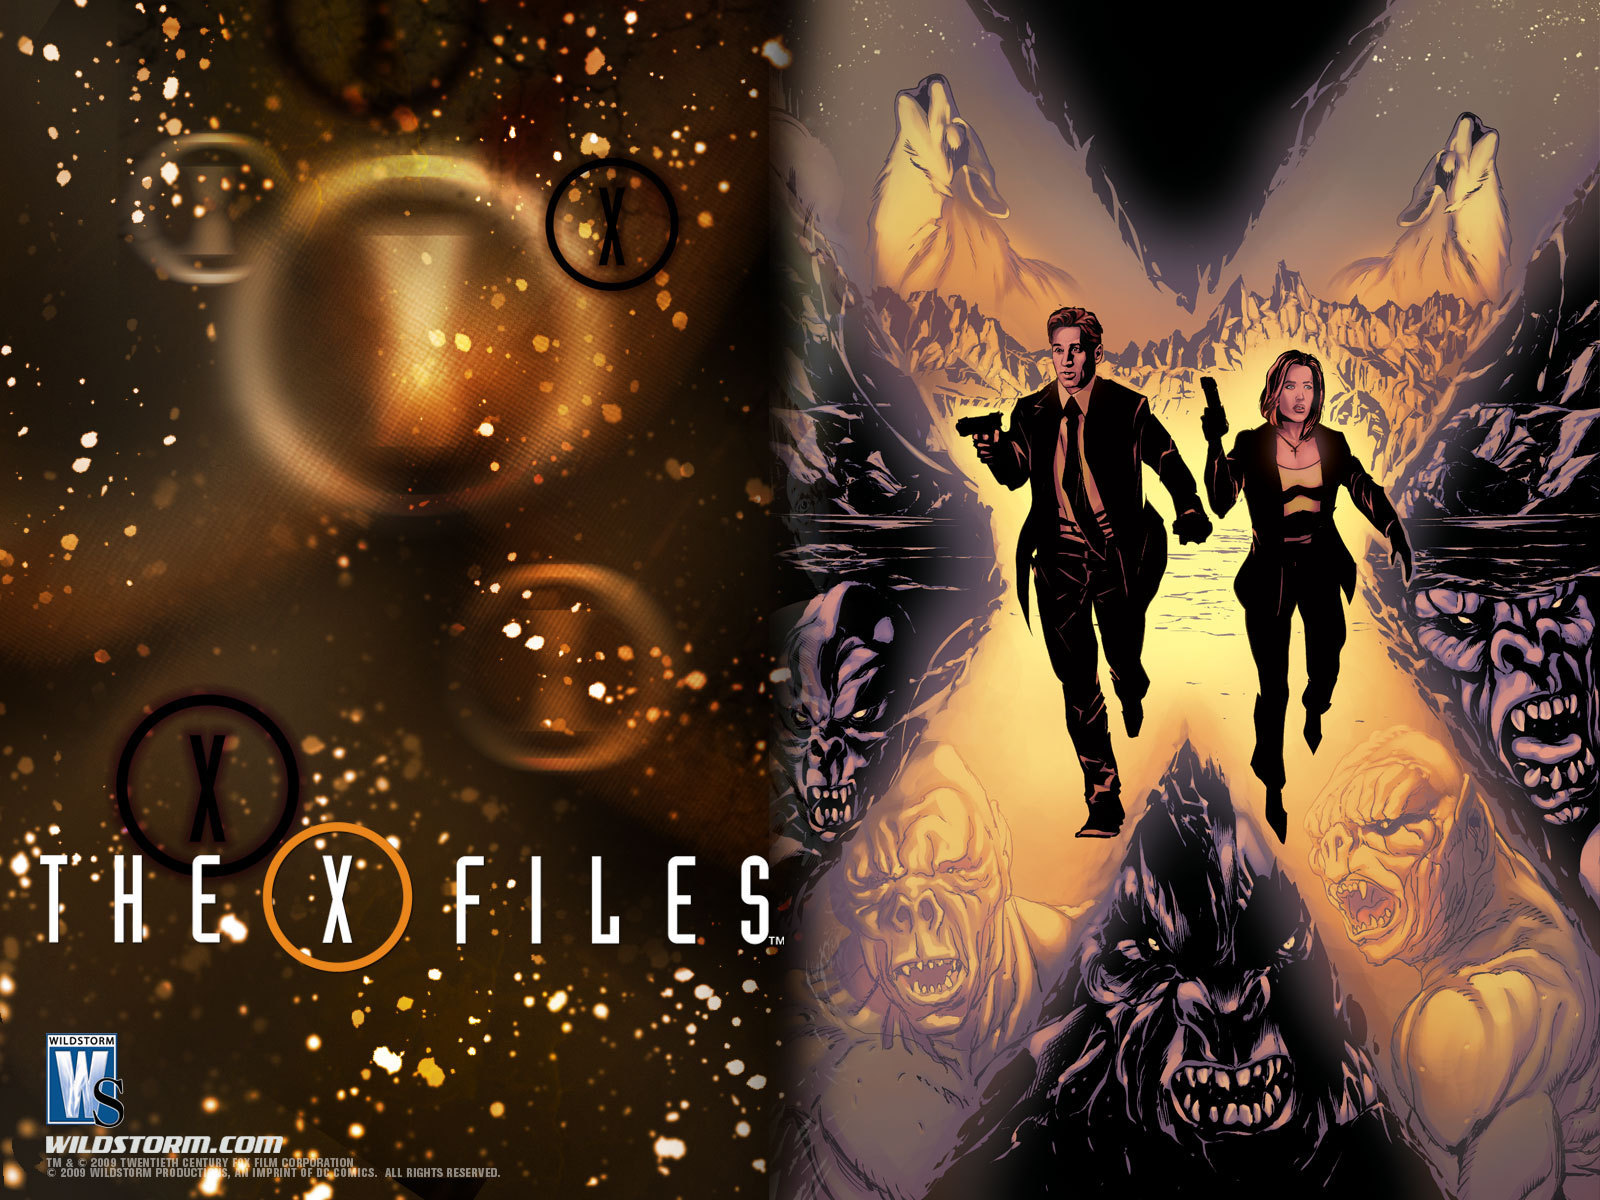 The X Files Ics